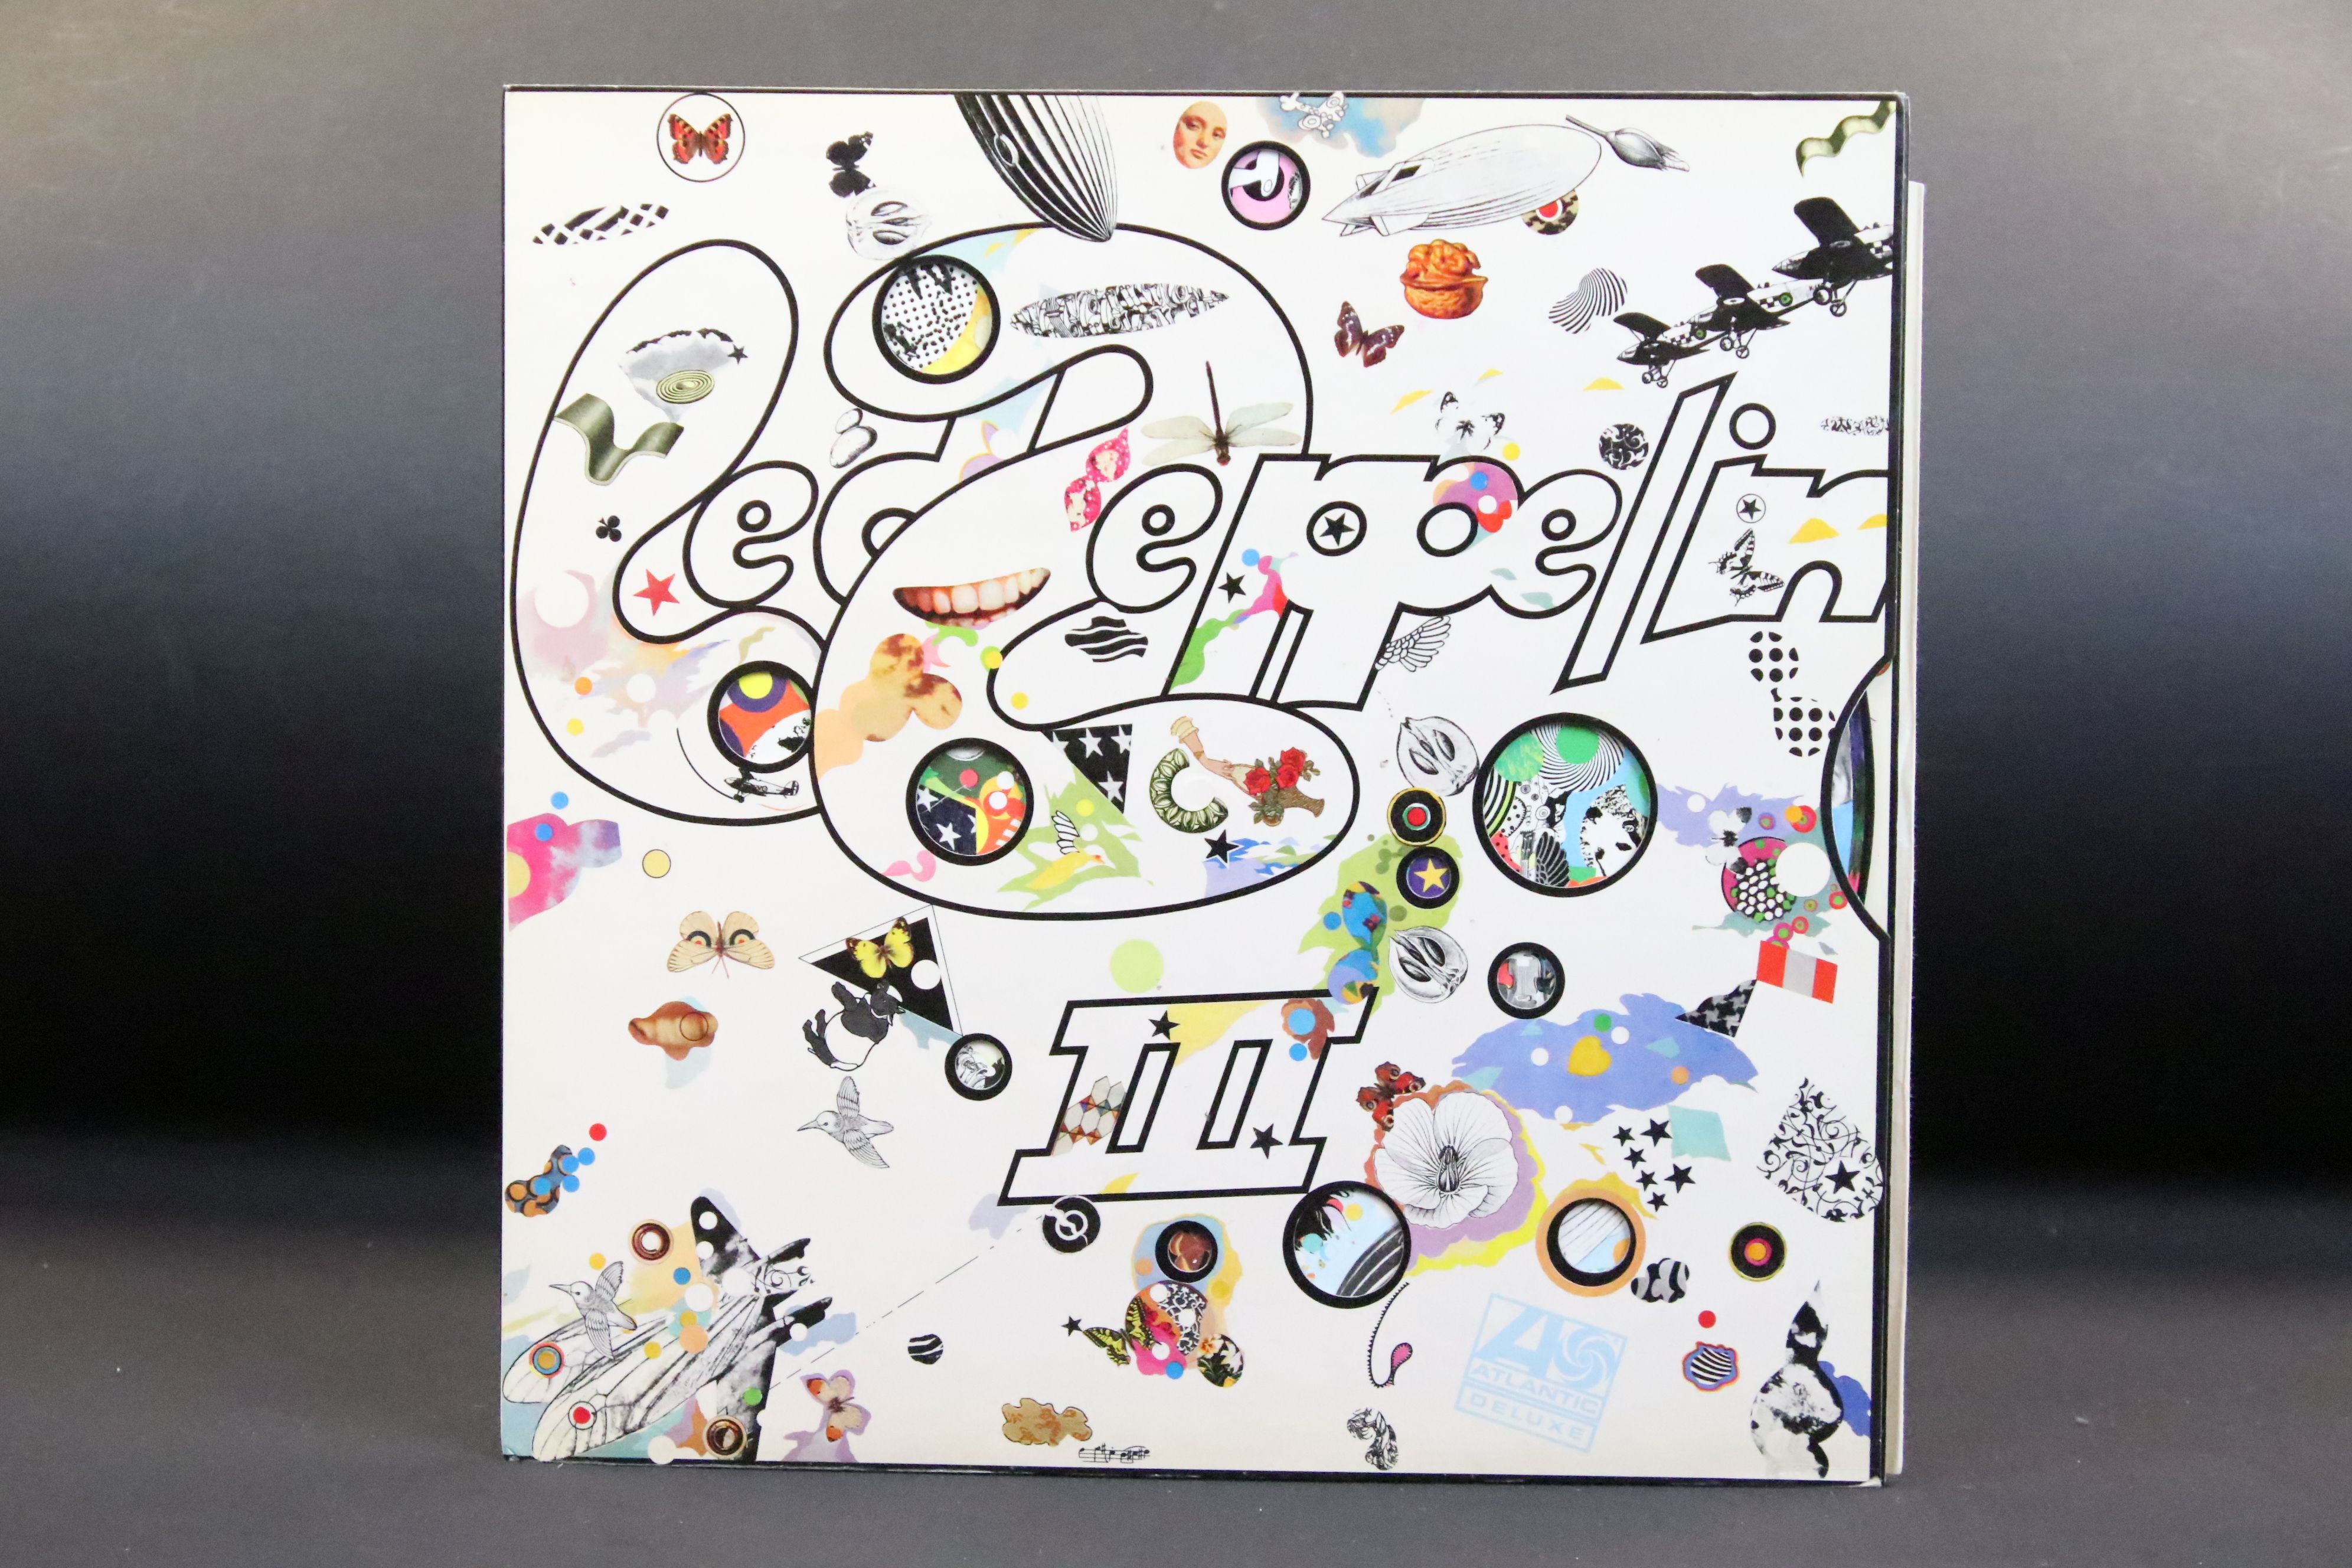 Vinyl - Led Zeppelin III original plum Atlantic labels, A5/B5 matrices, Peter Grant credit, fully